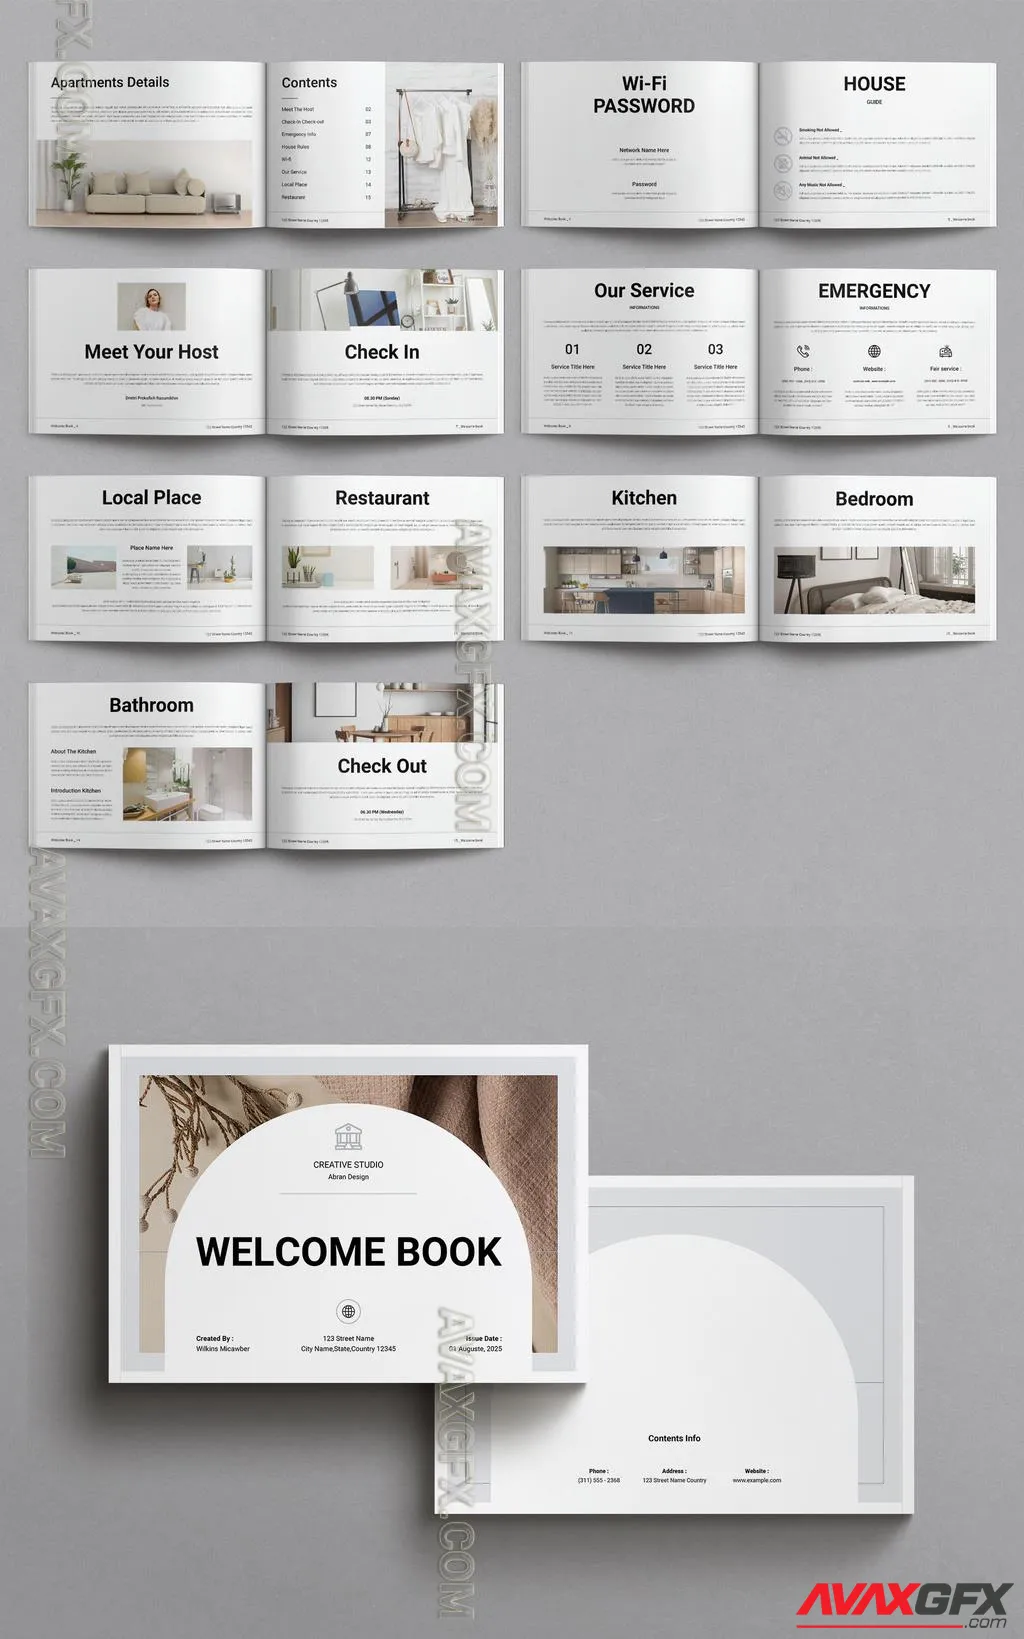 Adobestock - Welcome Book Layout Design Template Landscape 757186012